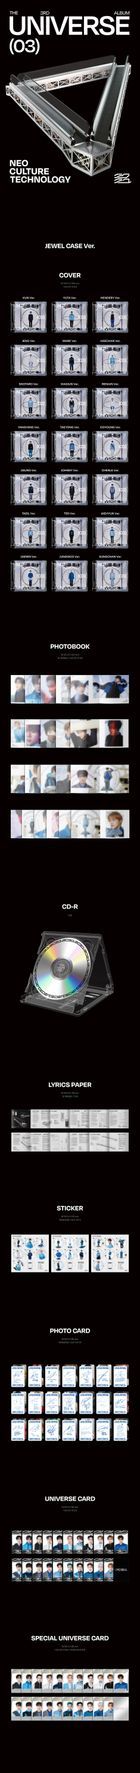 NCT Vol. 3 - Universe (Jewel Case Version) (Sung Chan Version)